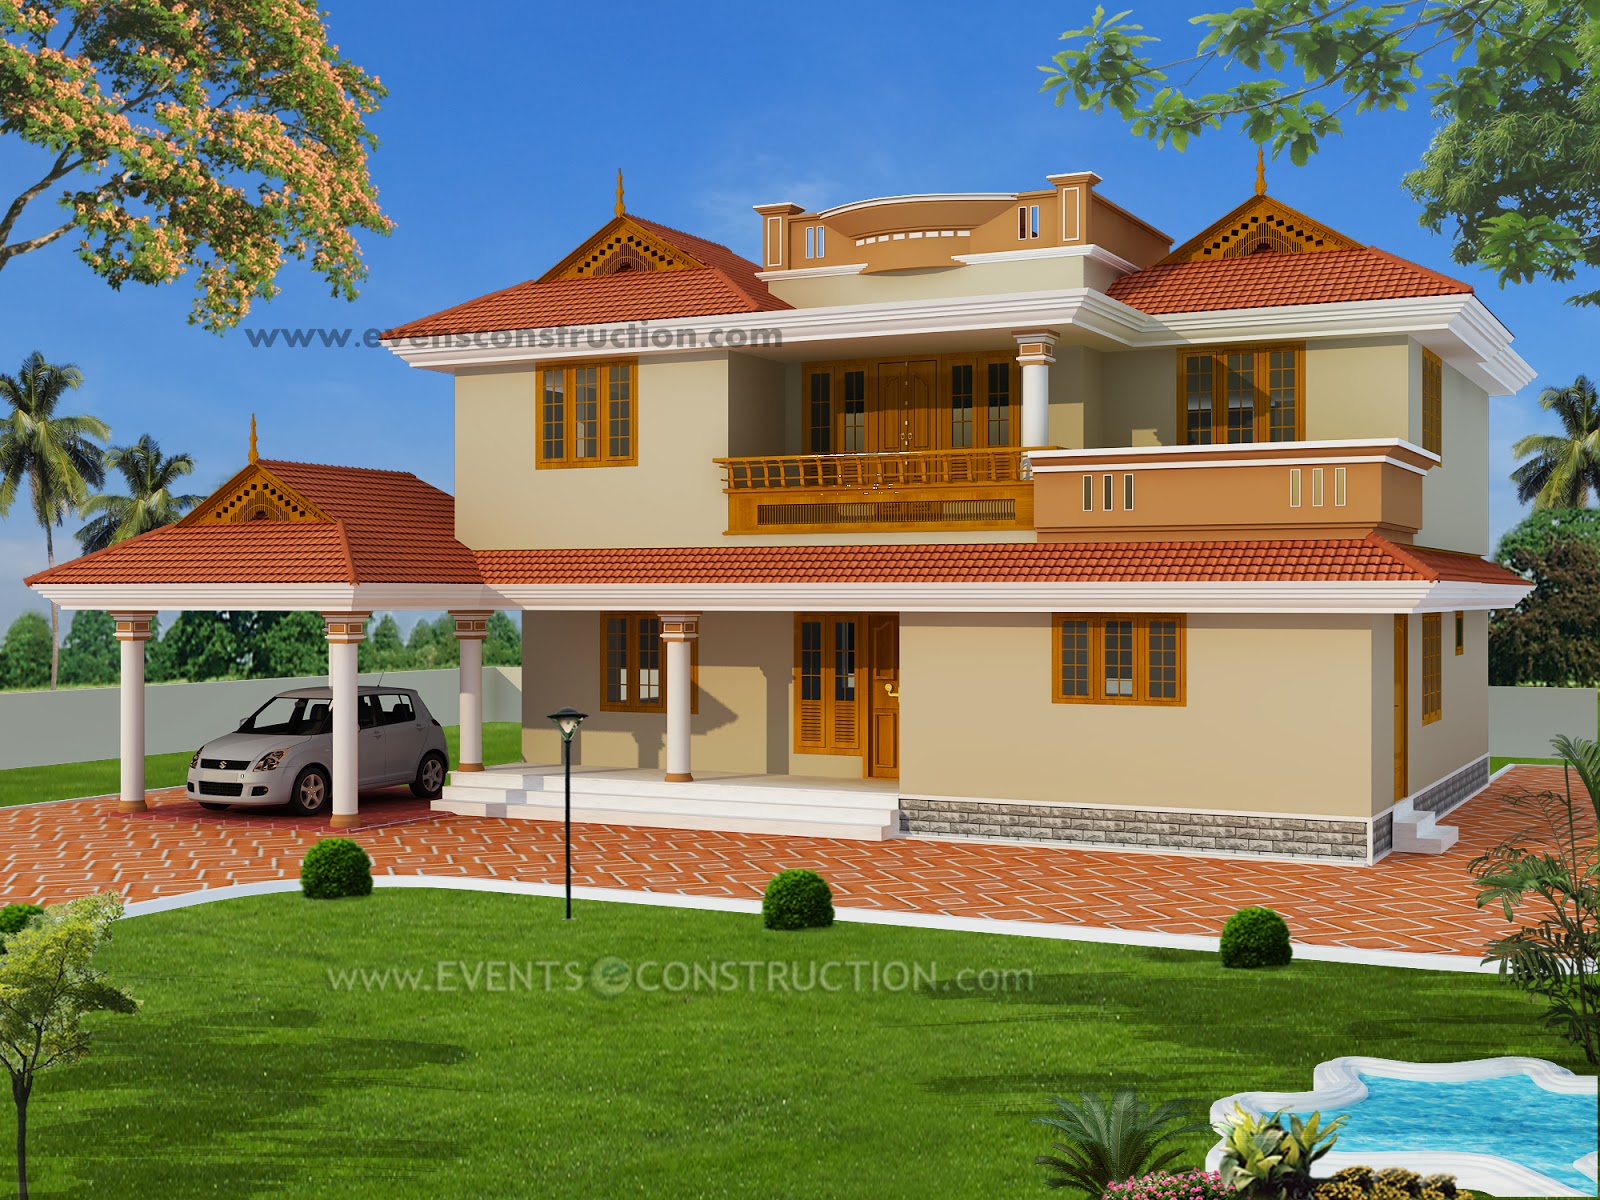 Evens Construction Pvt Ltd: 3 Bedroom Kerala model home elevation